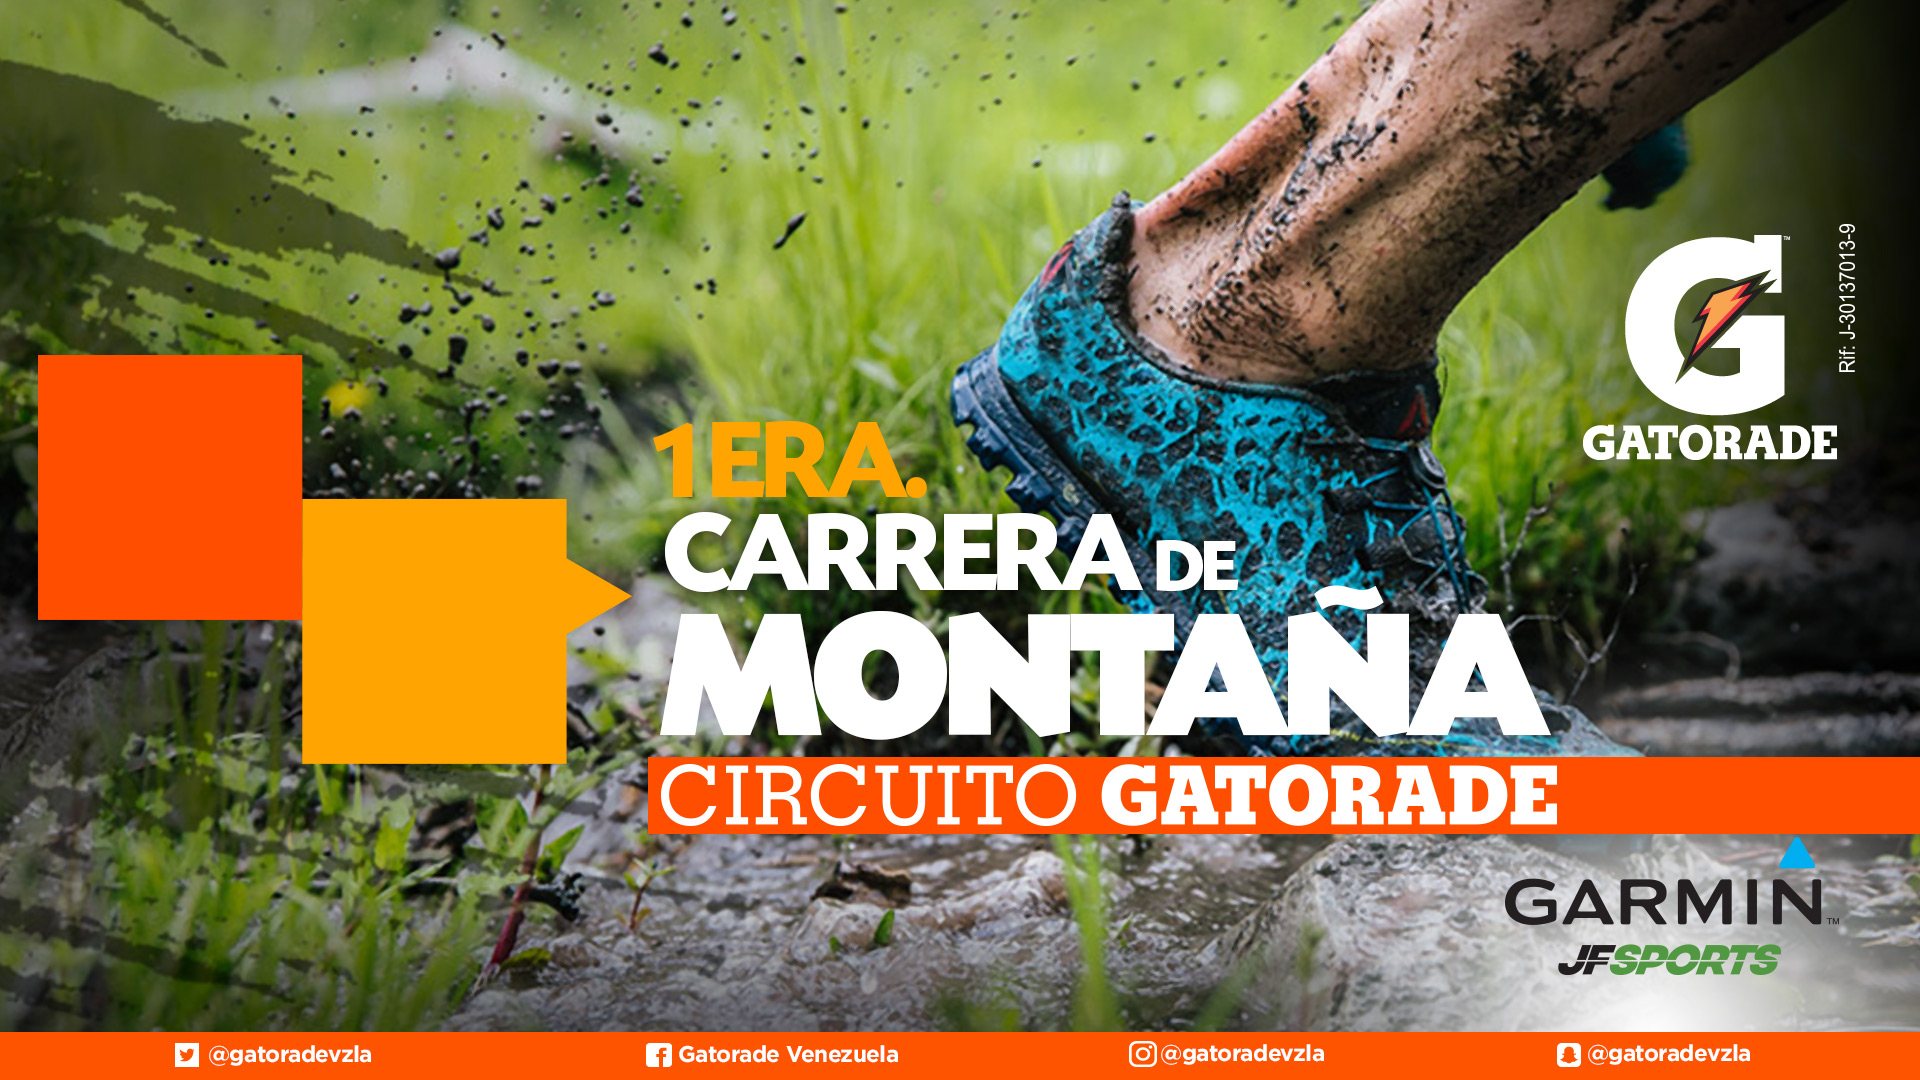 1era Carrera de Montaña Gatorade - Copa Garmin JFSports